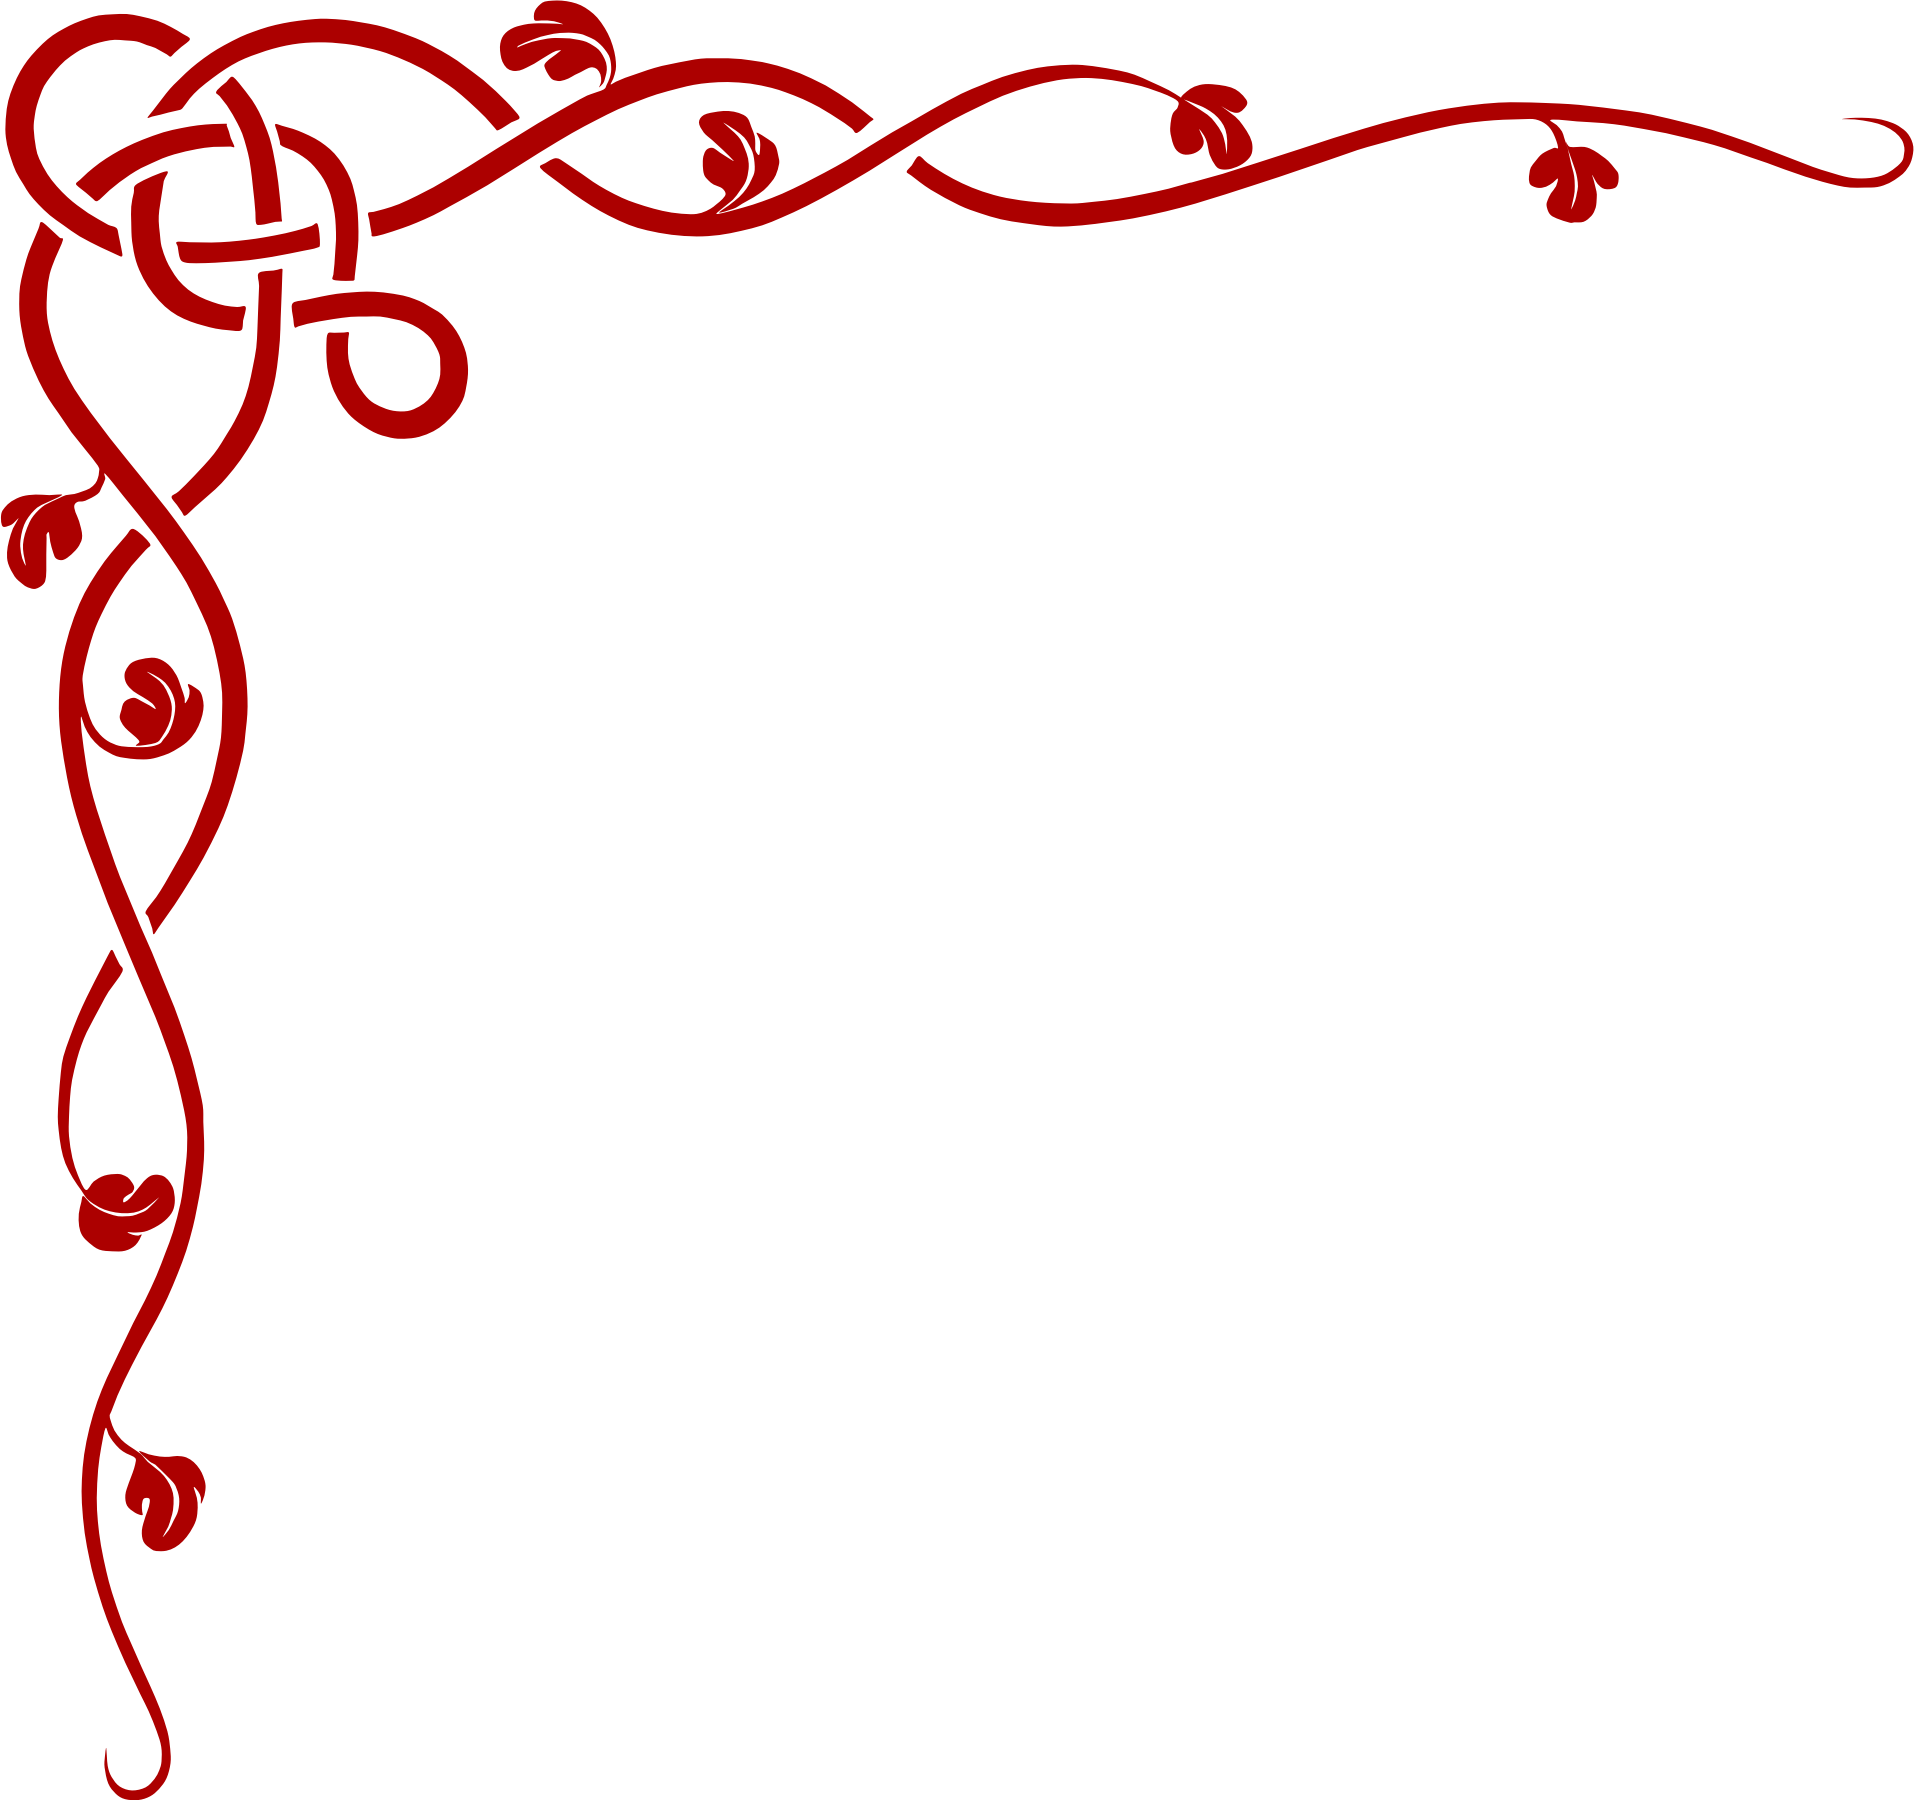 Knot Corner Border - Border Line Design (1914x1800)